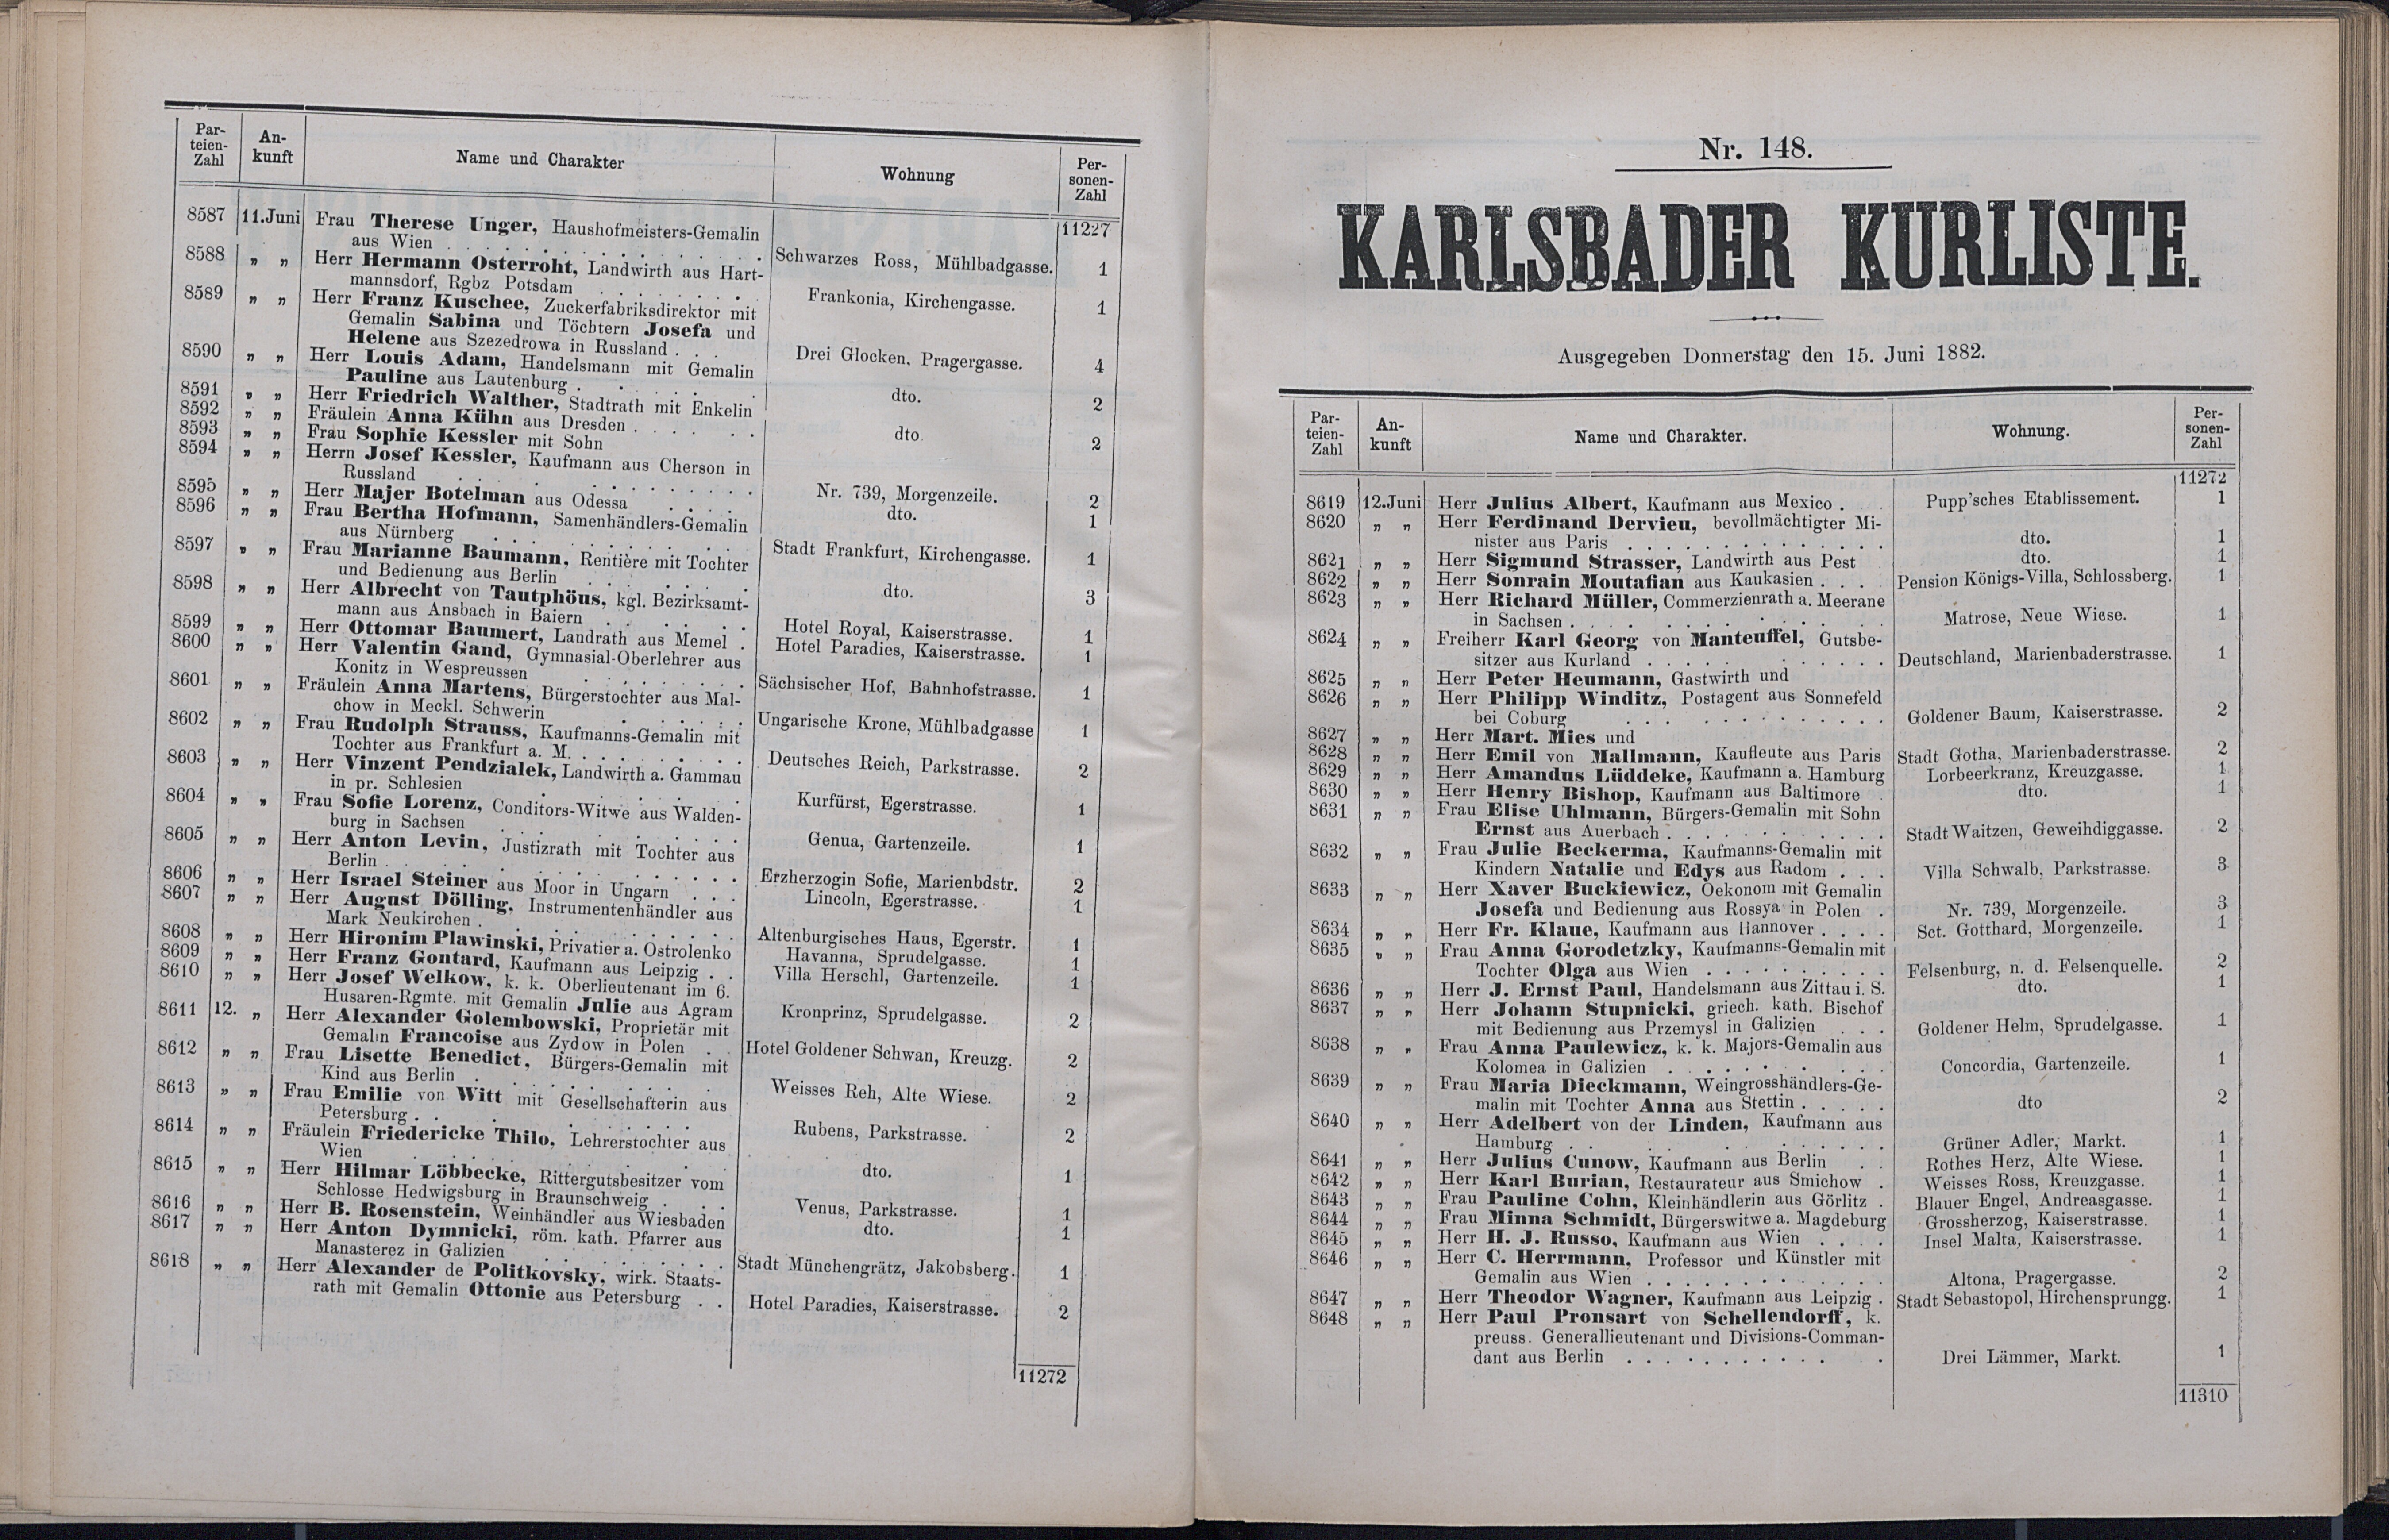 195. soap-kv_knihovna_karlsbader-kurliste-1882_1960